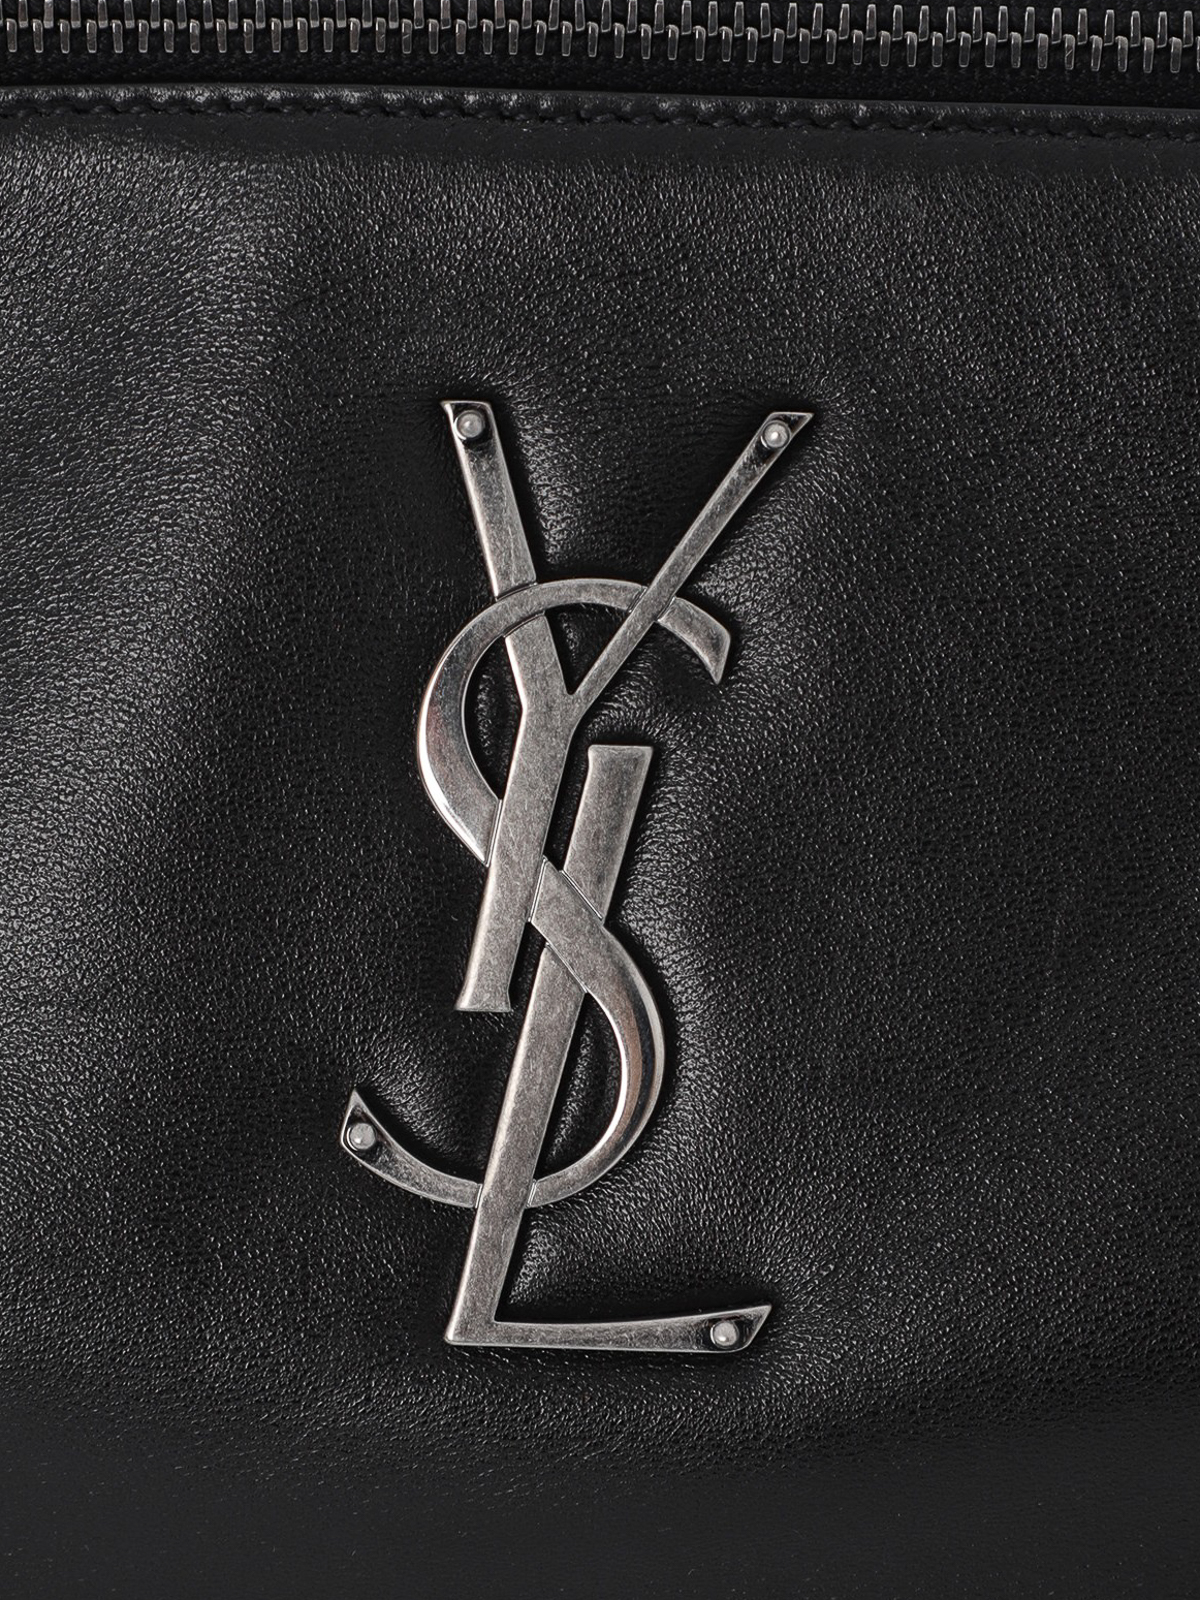 YSL belt bag, Saint Laurent